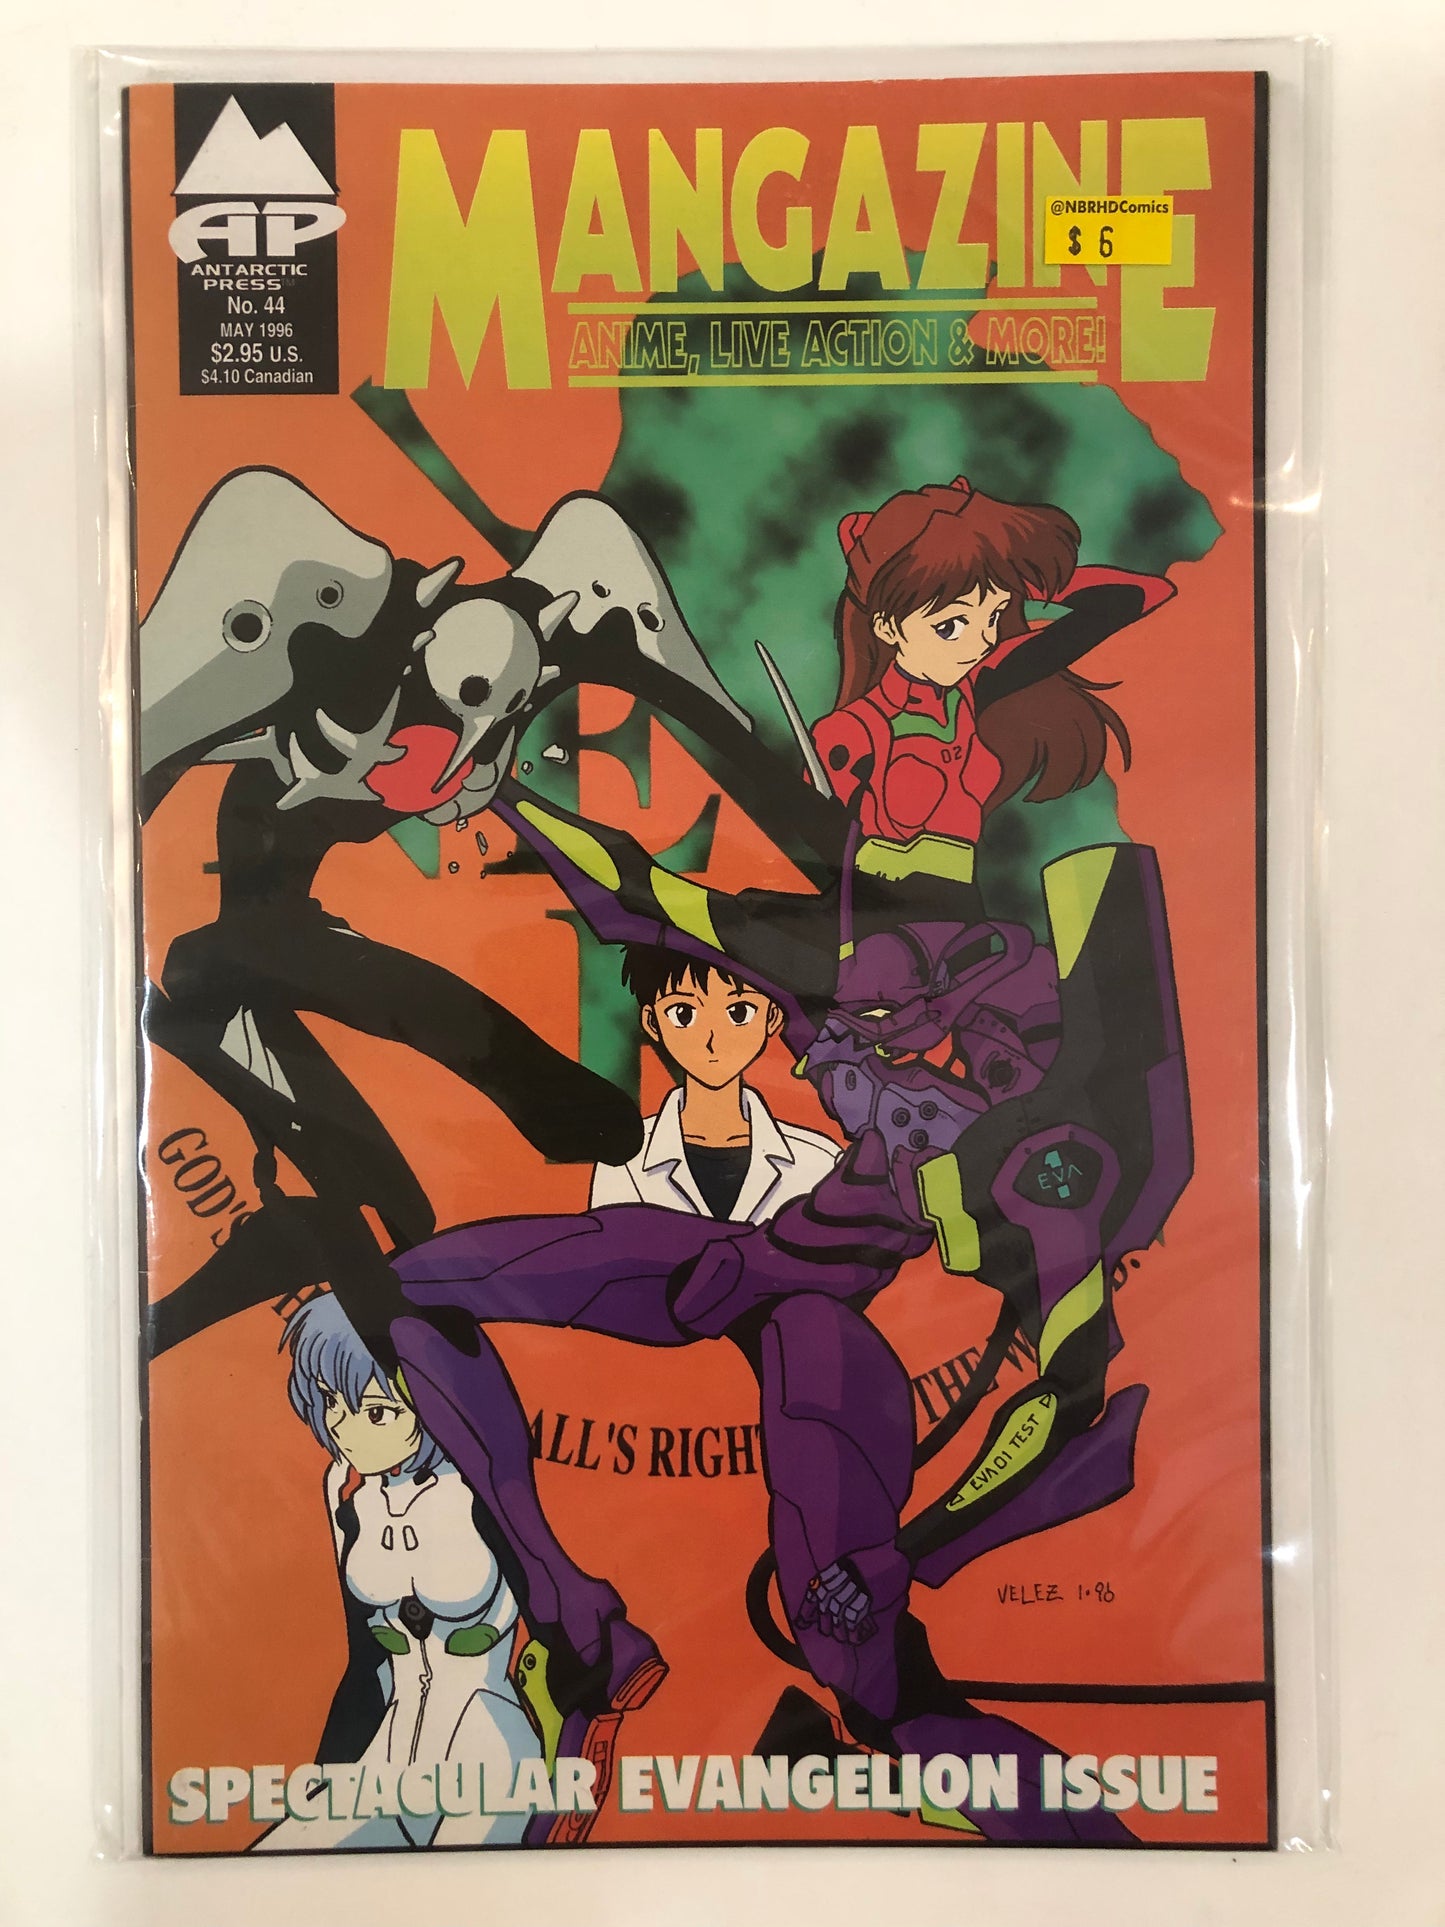 Mangazine: Anime, Live Action, & More! #44